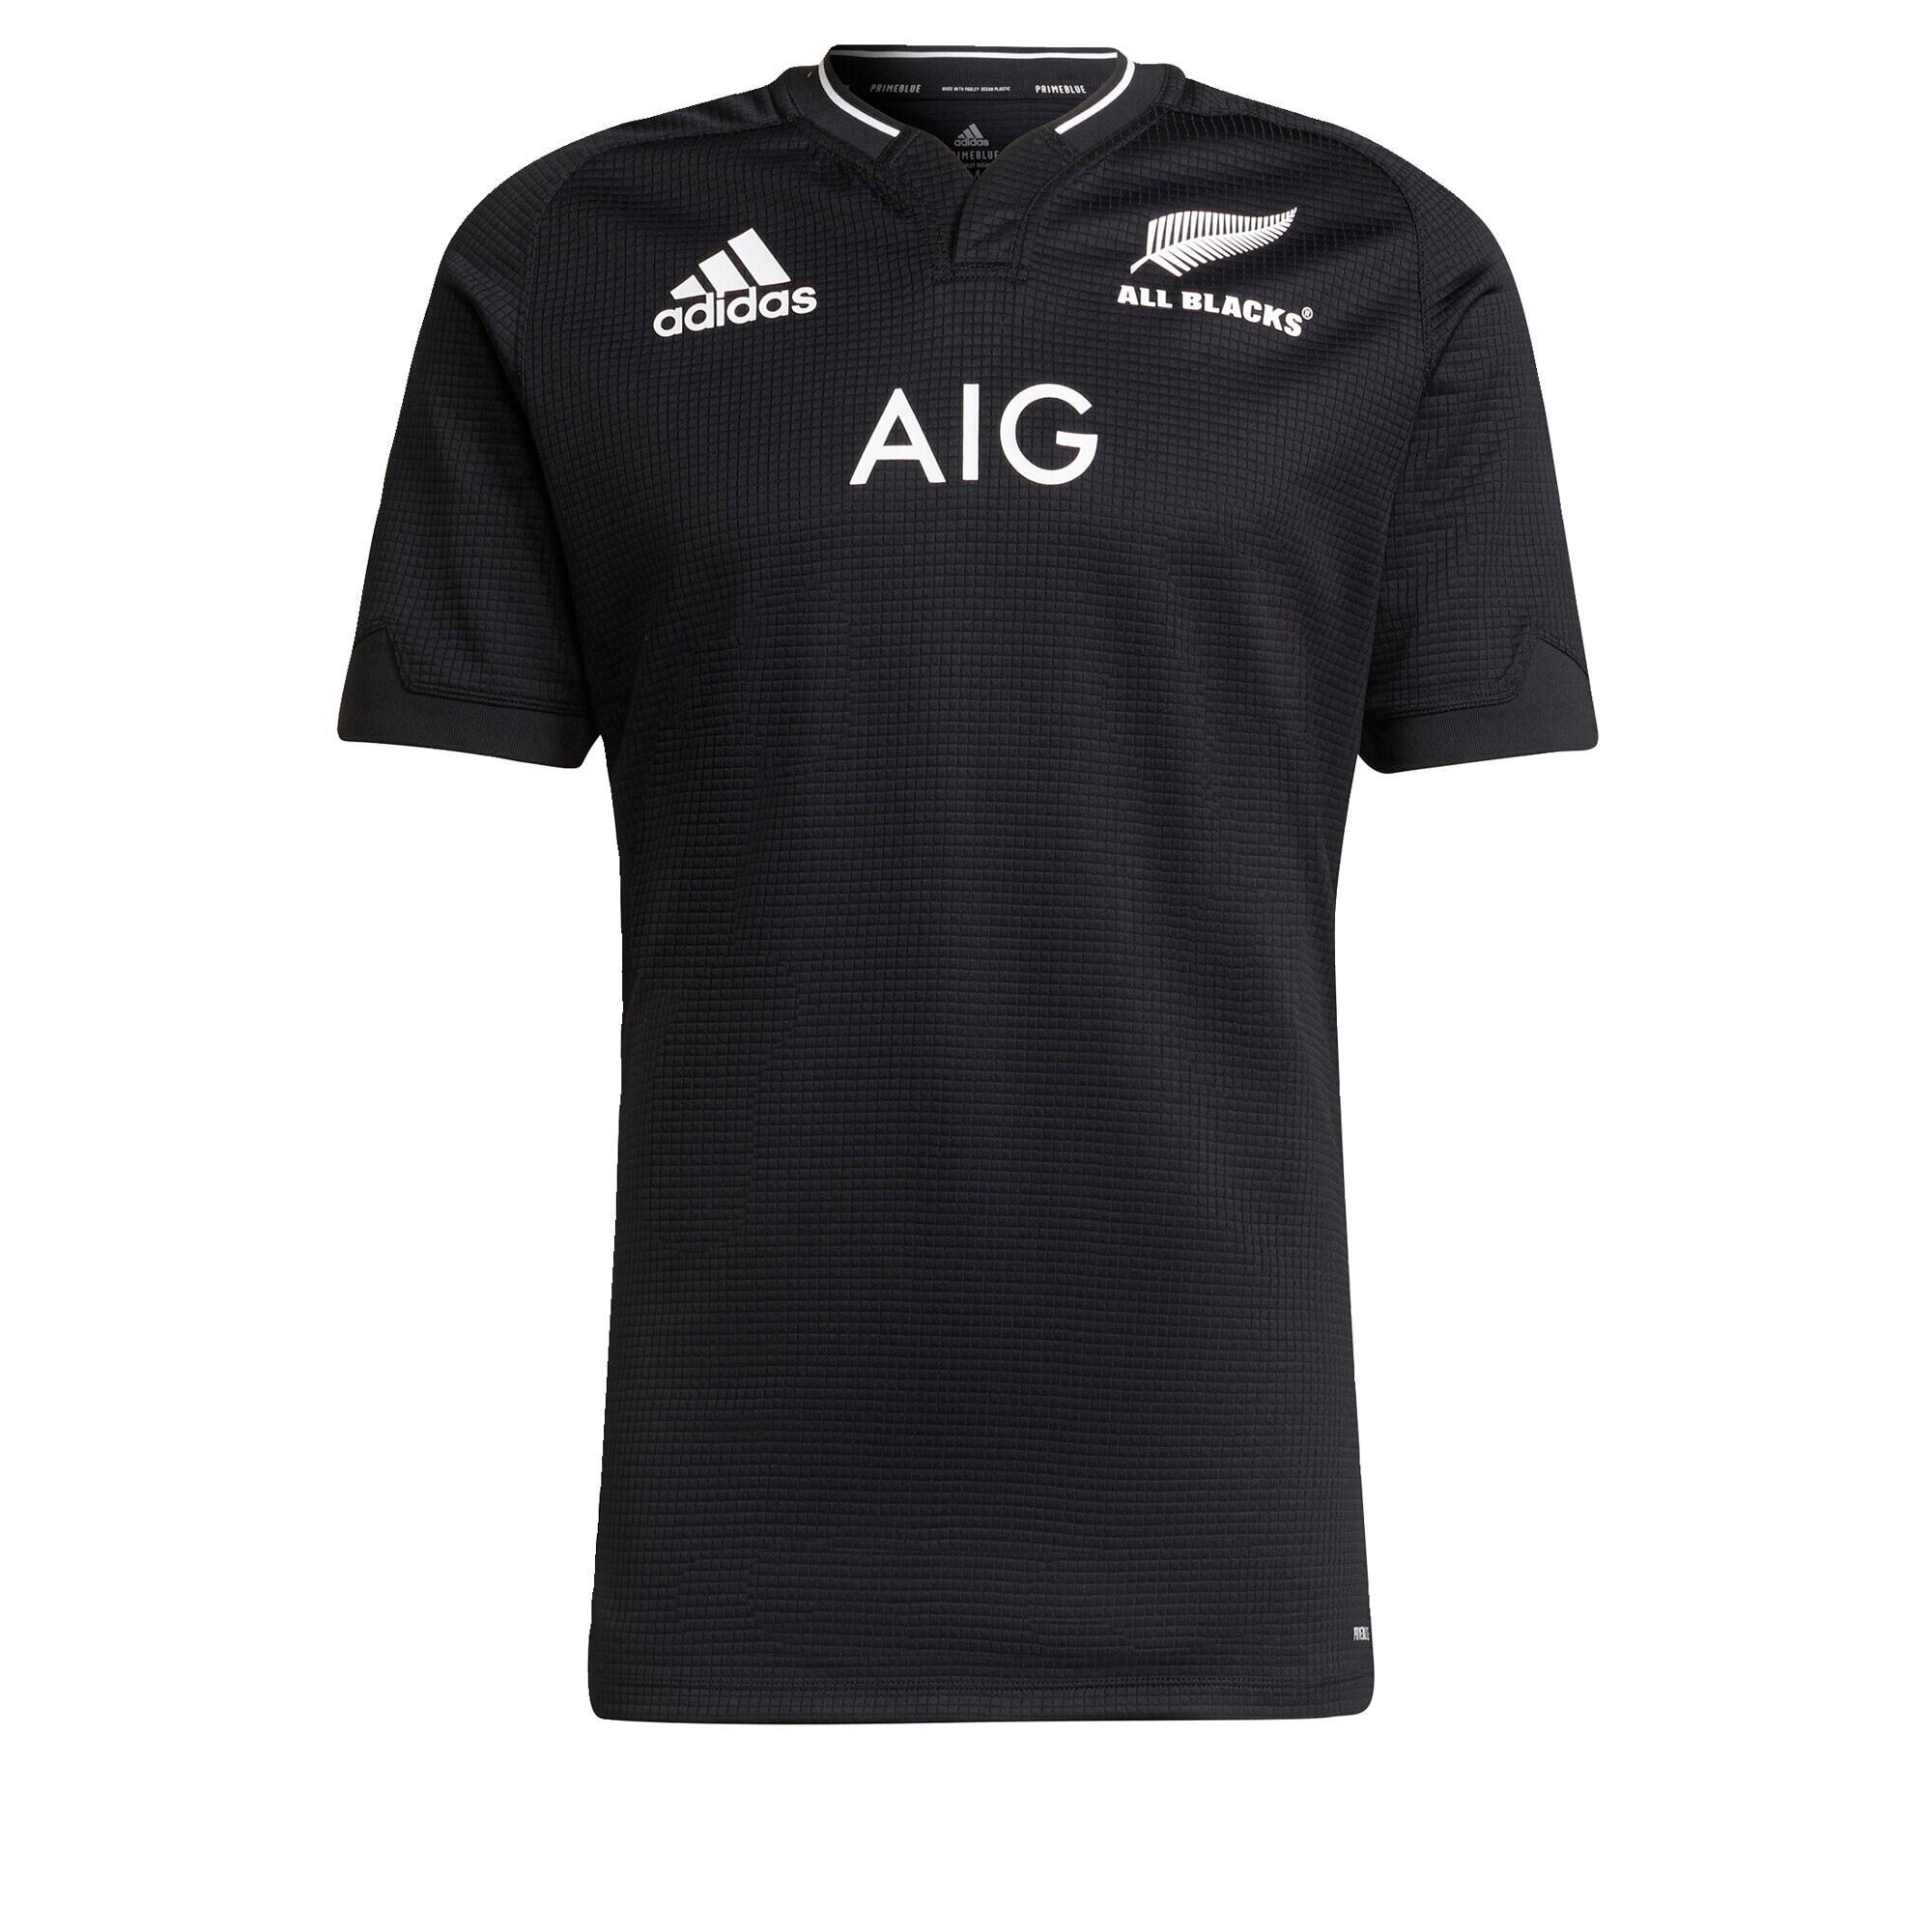 ADIDAS adidas New Zealand All Blacks Home Rugby Shirt Adults GU1915 Black